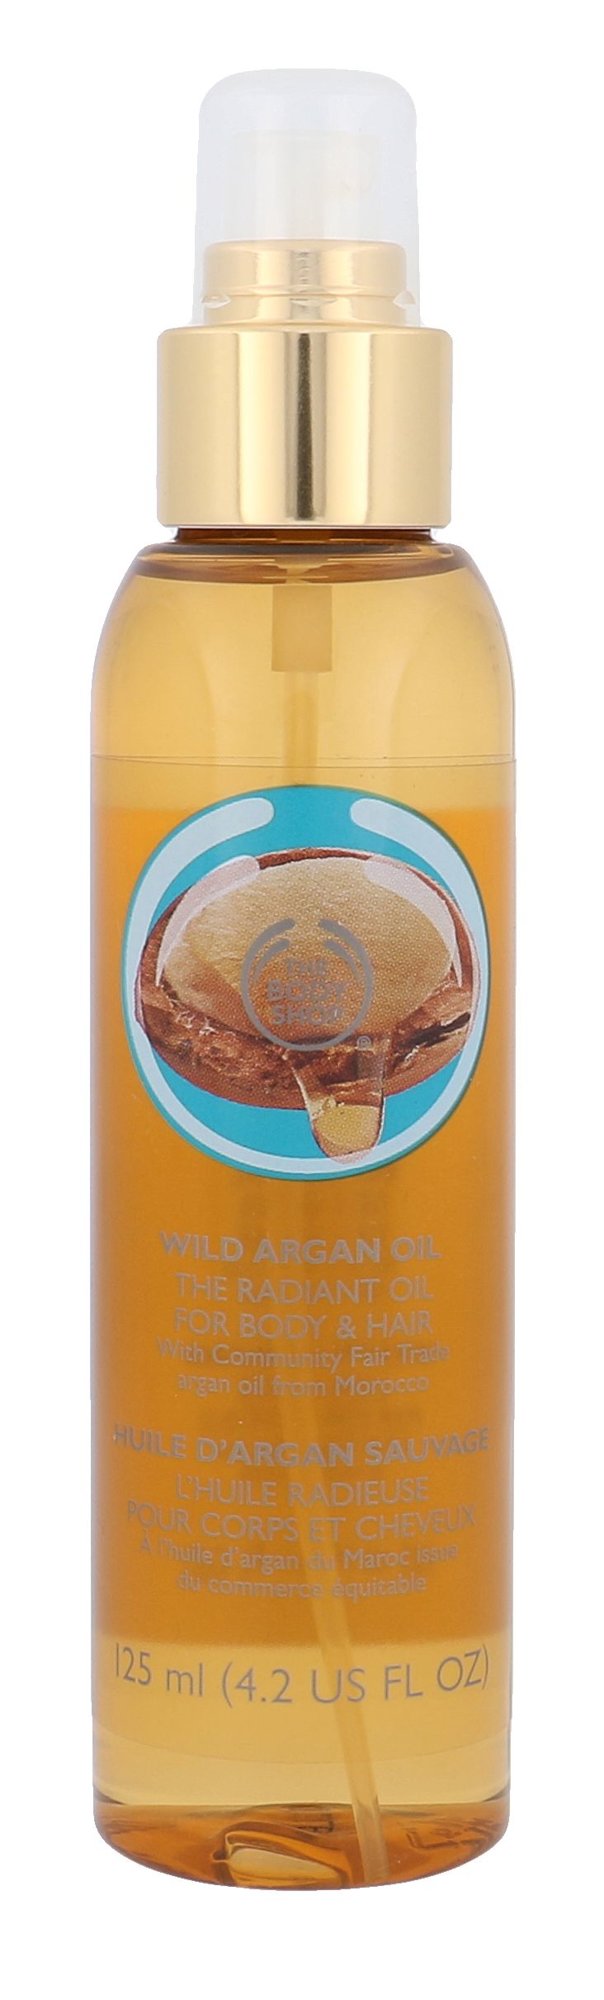 The Body Shop Wild Argan Oil The Radiant Body&Hair Oil